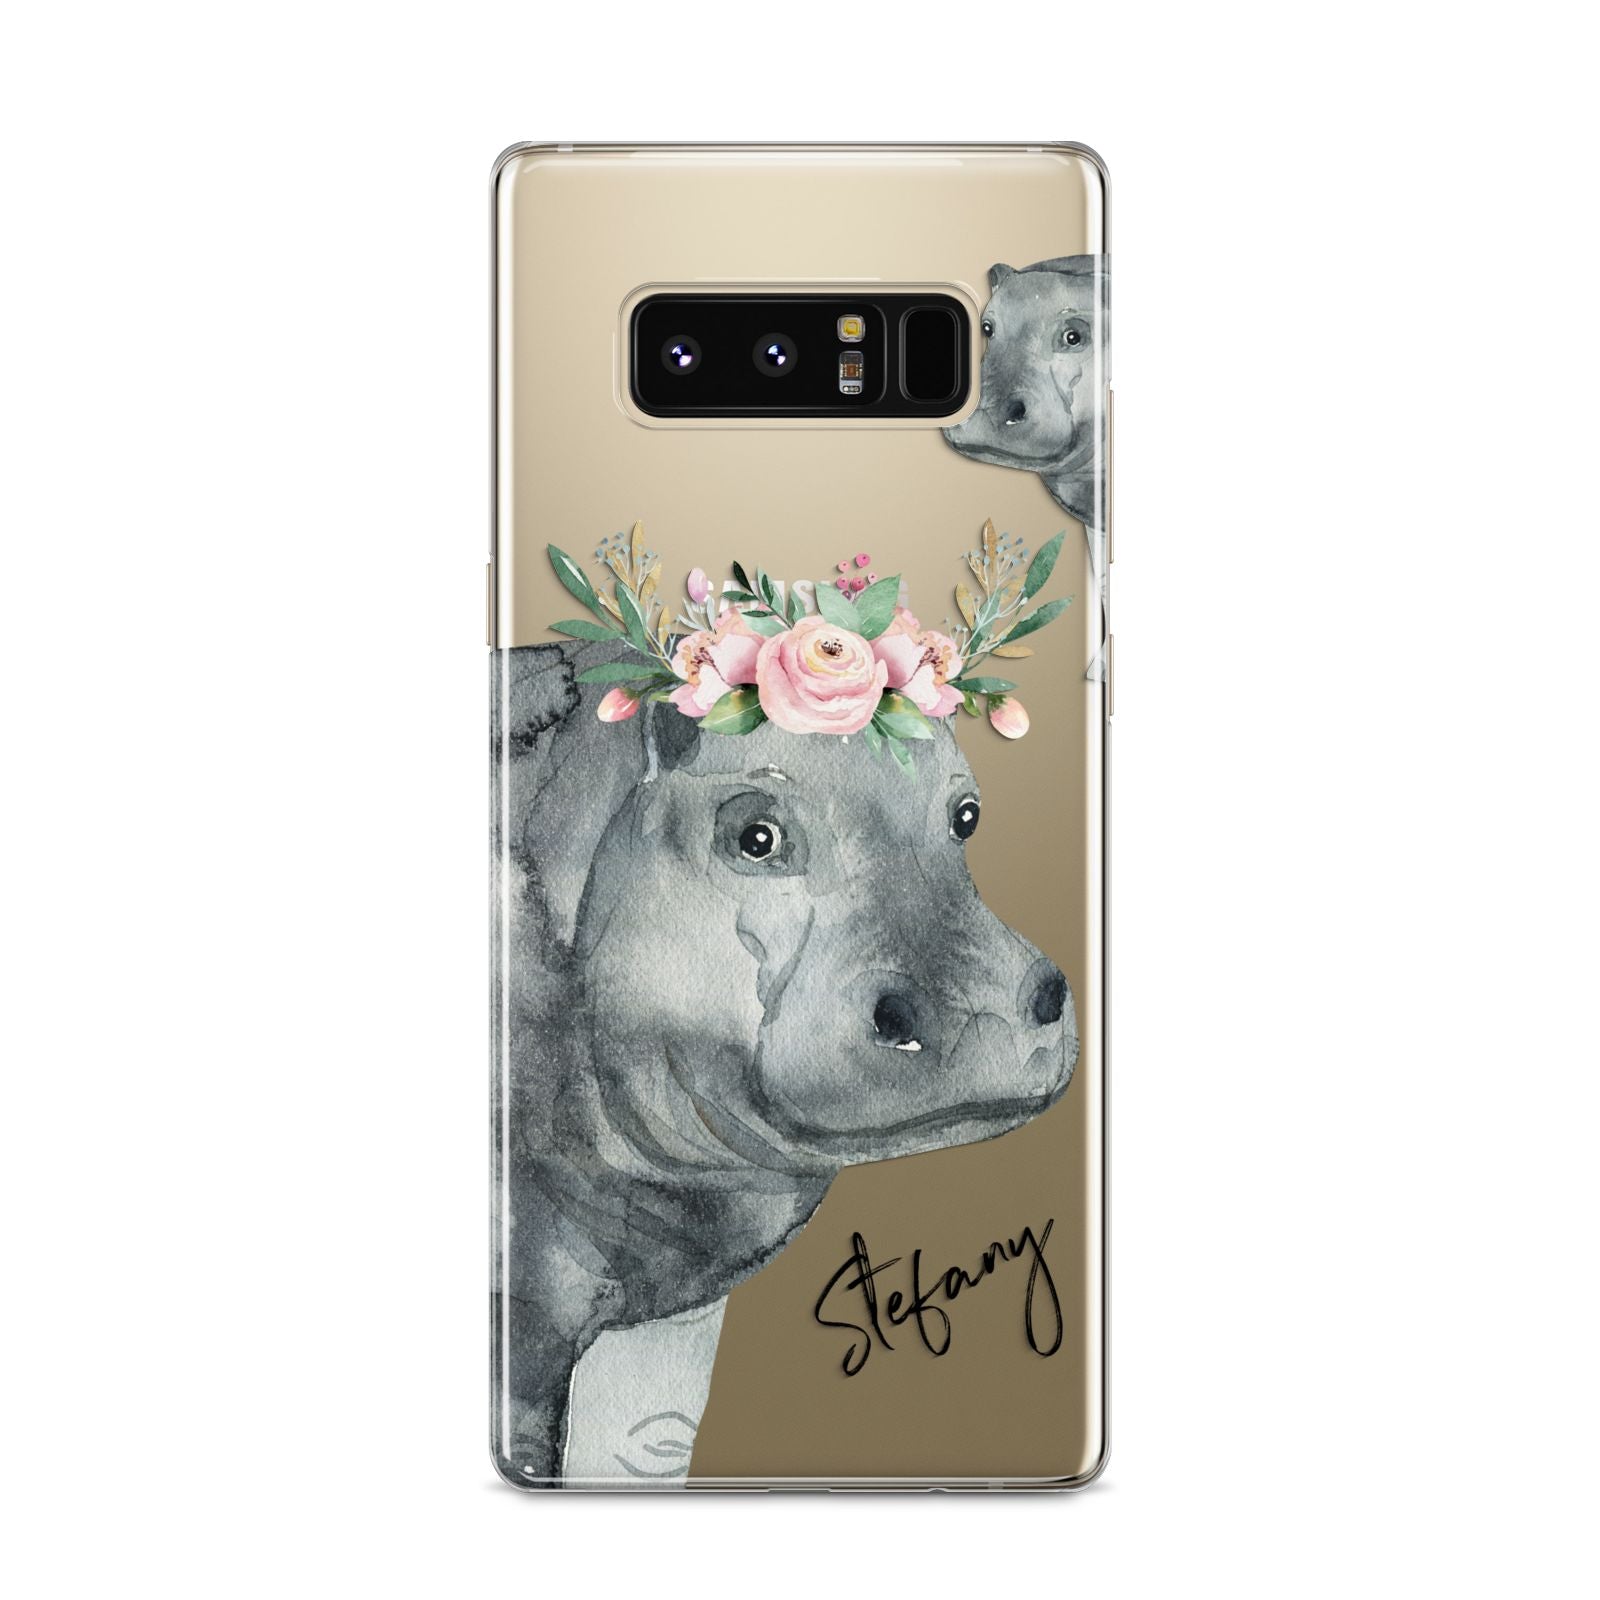 Personalised Hippopotamus Samsung Galaxy S8 Case